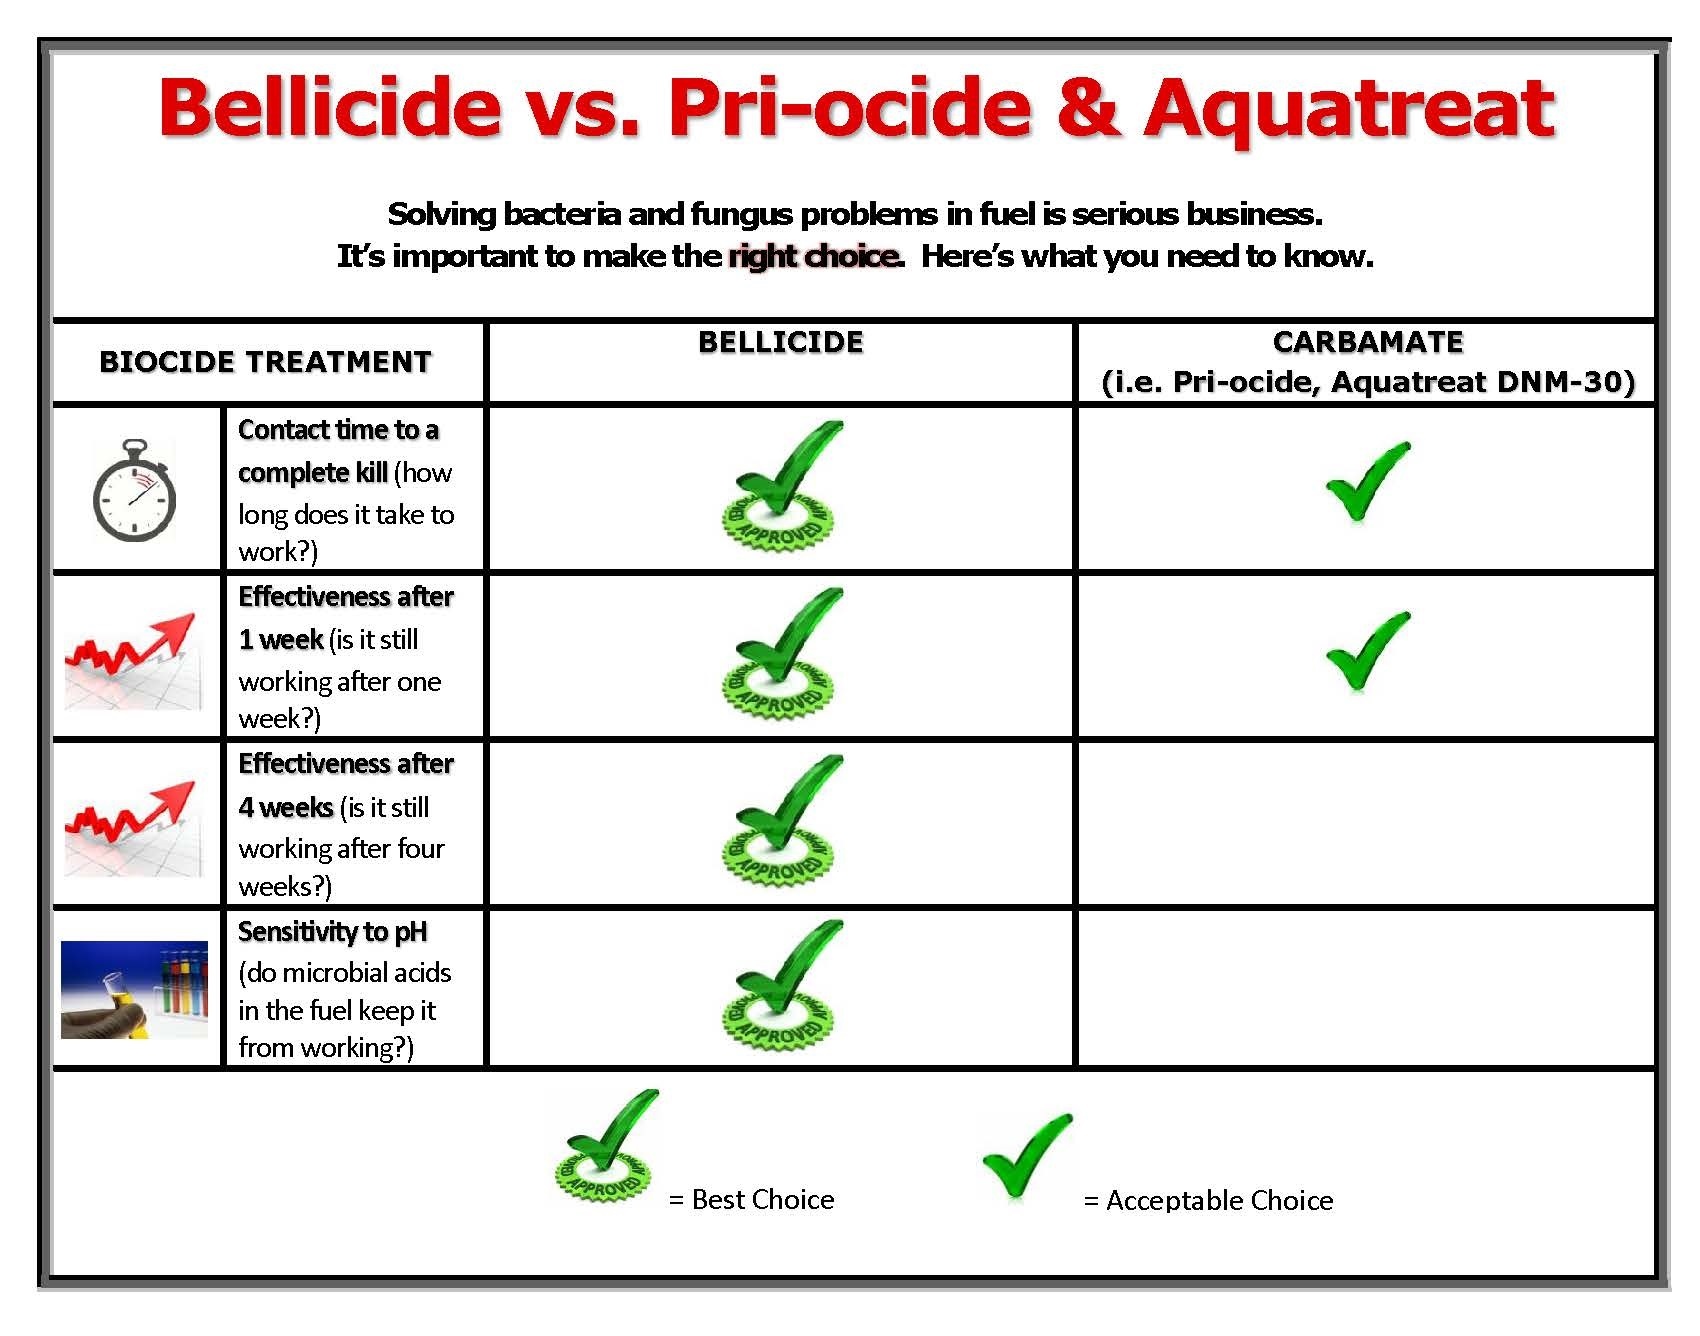 Choosing the right fuel biocide: Bellicide vs. Pri-ocide and Aquatreat